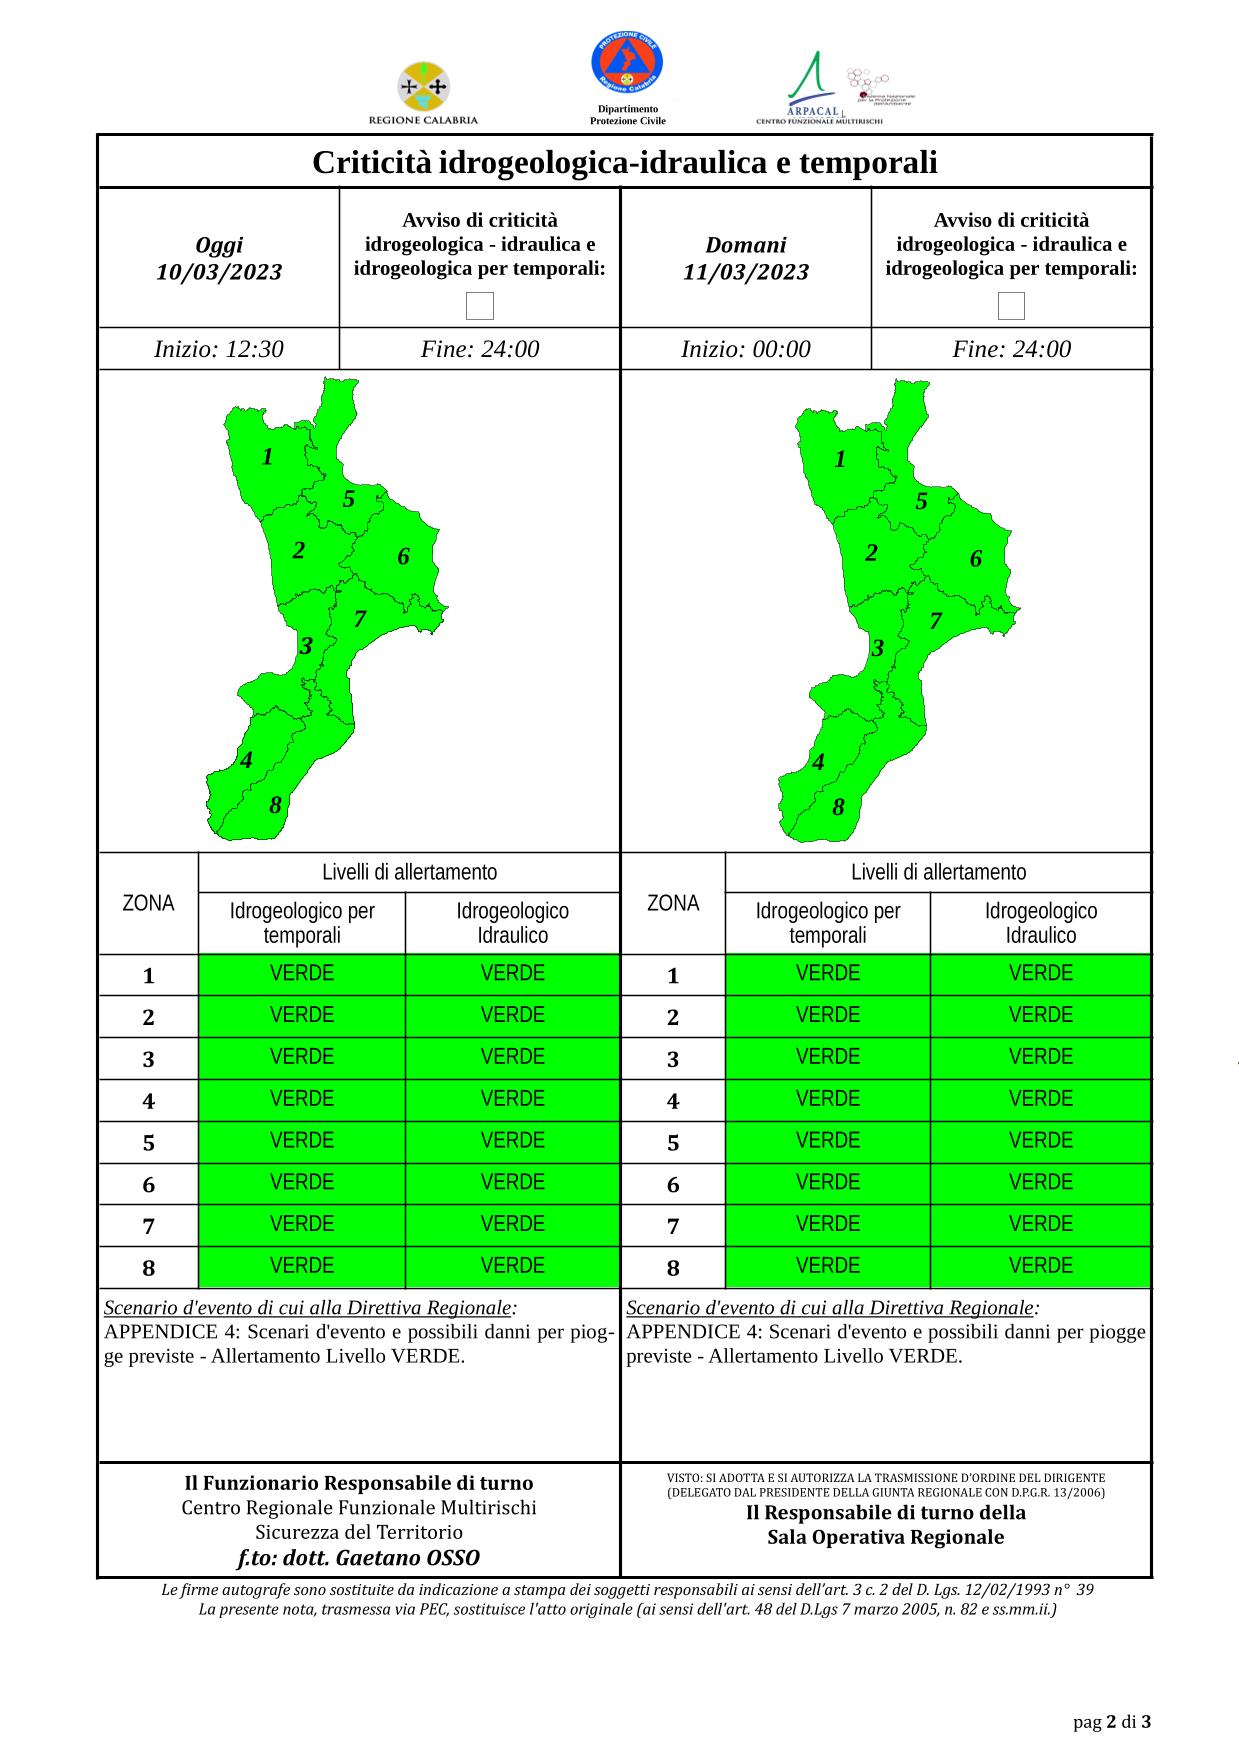 Criticità idrogeologica-idraulica e temporali in Calabria 10-03-2023